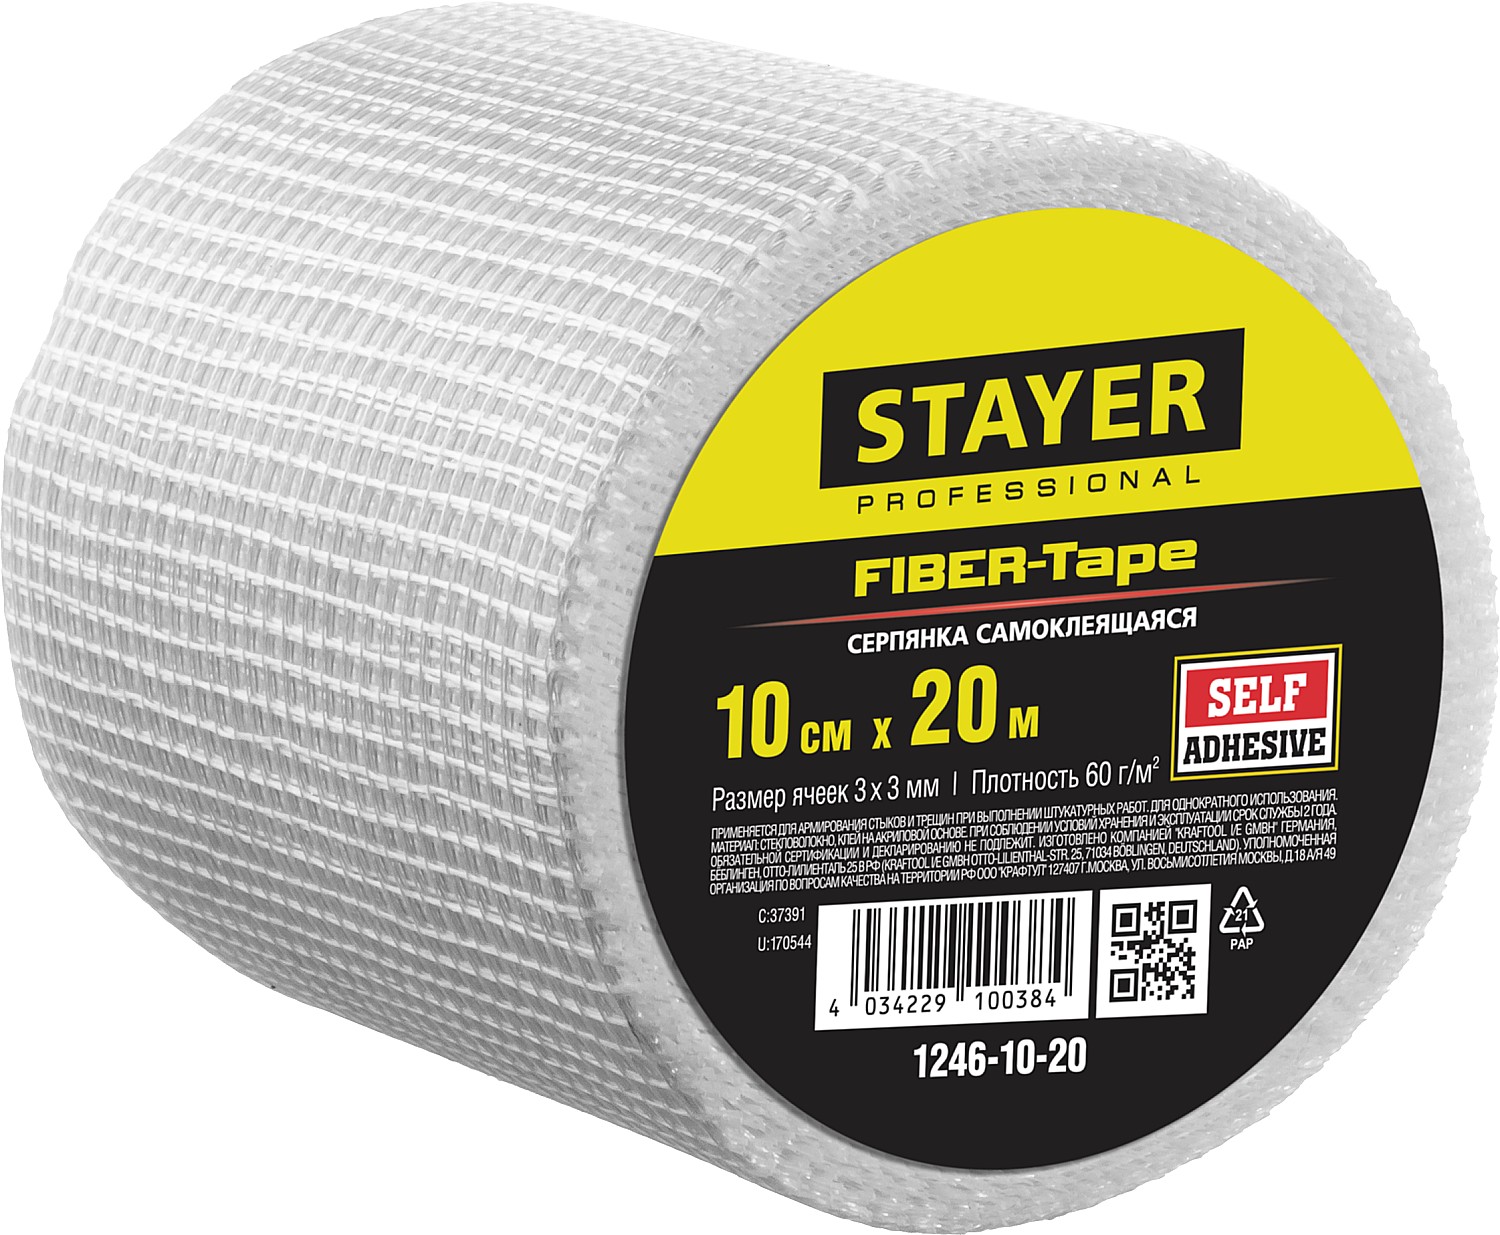 STAYER FIBER-Tape, 10   20 , 3  3 ,  , Professional (1246-10-20)